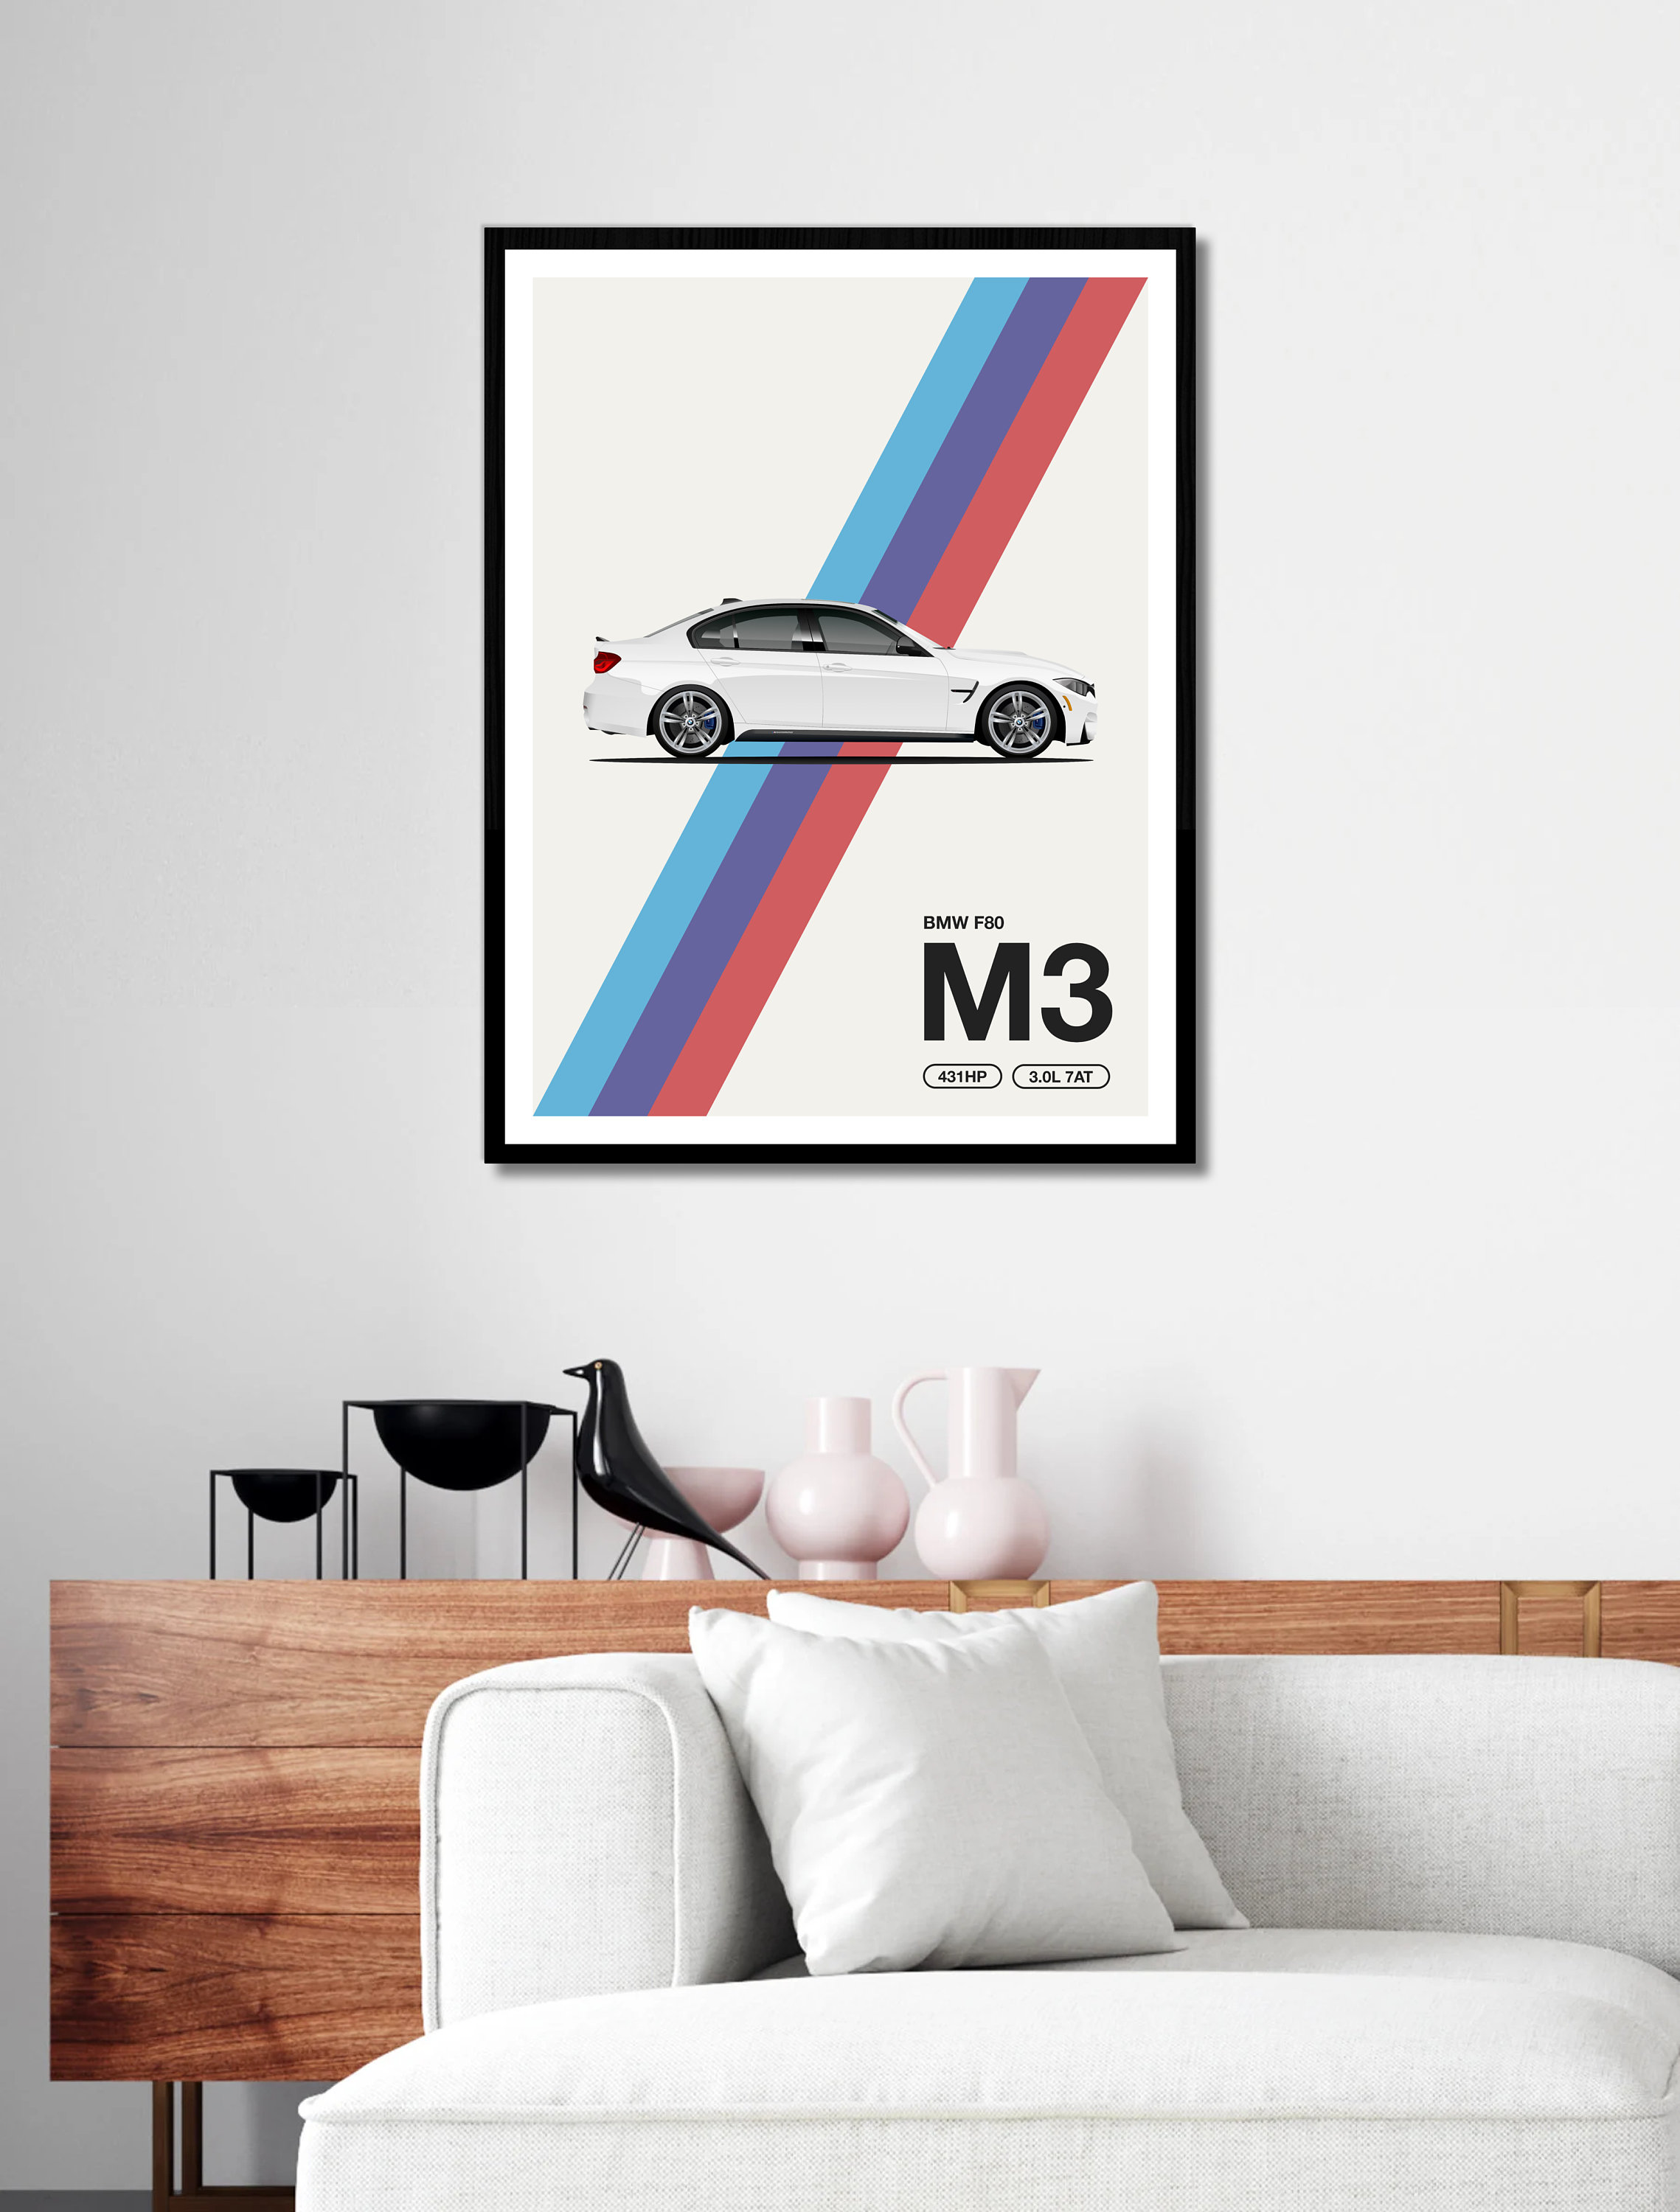 BMW M3 Car Poster Wall Decoration 16x20